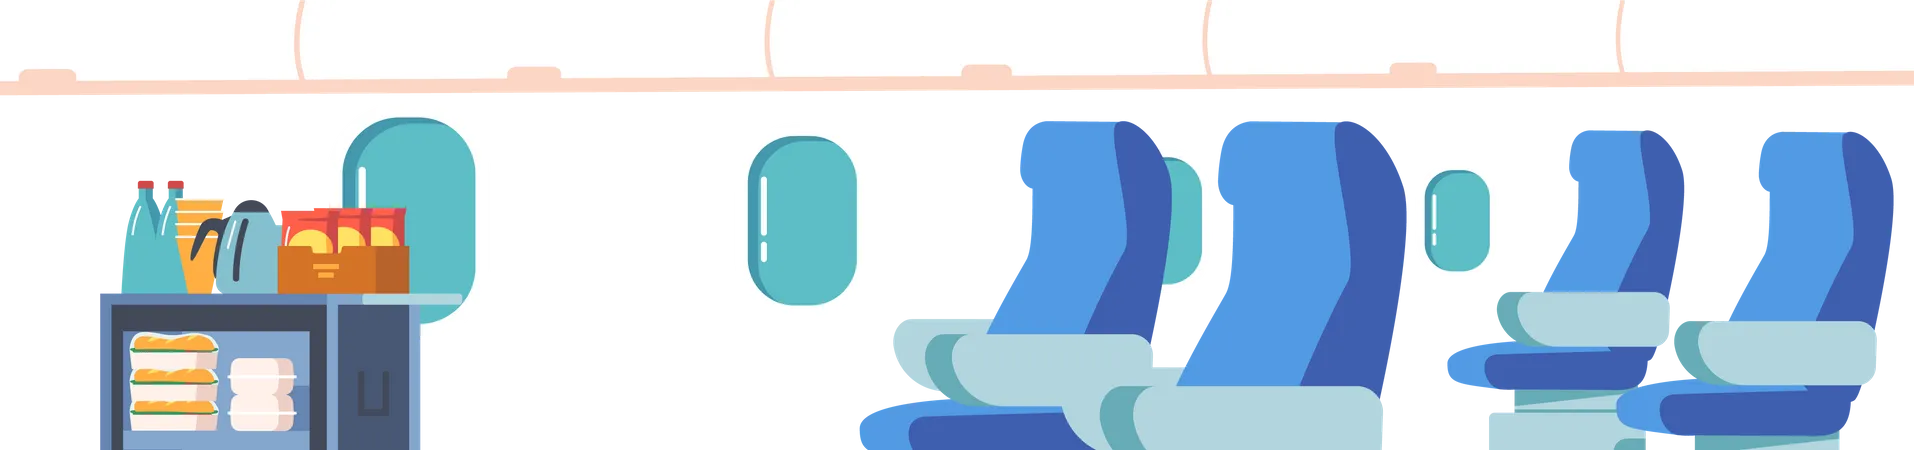 Empty Airplane Interior  Illustration